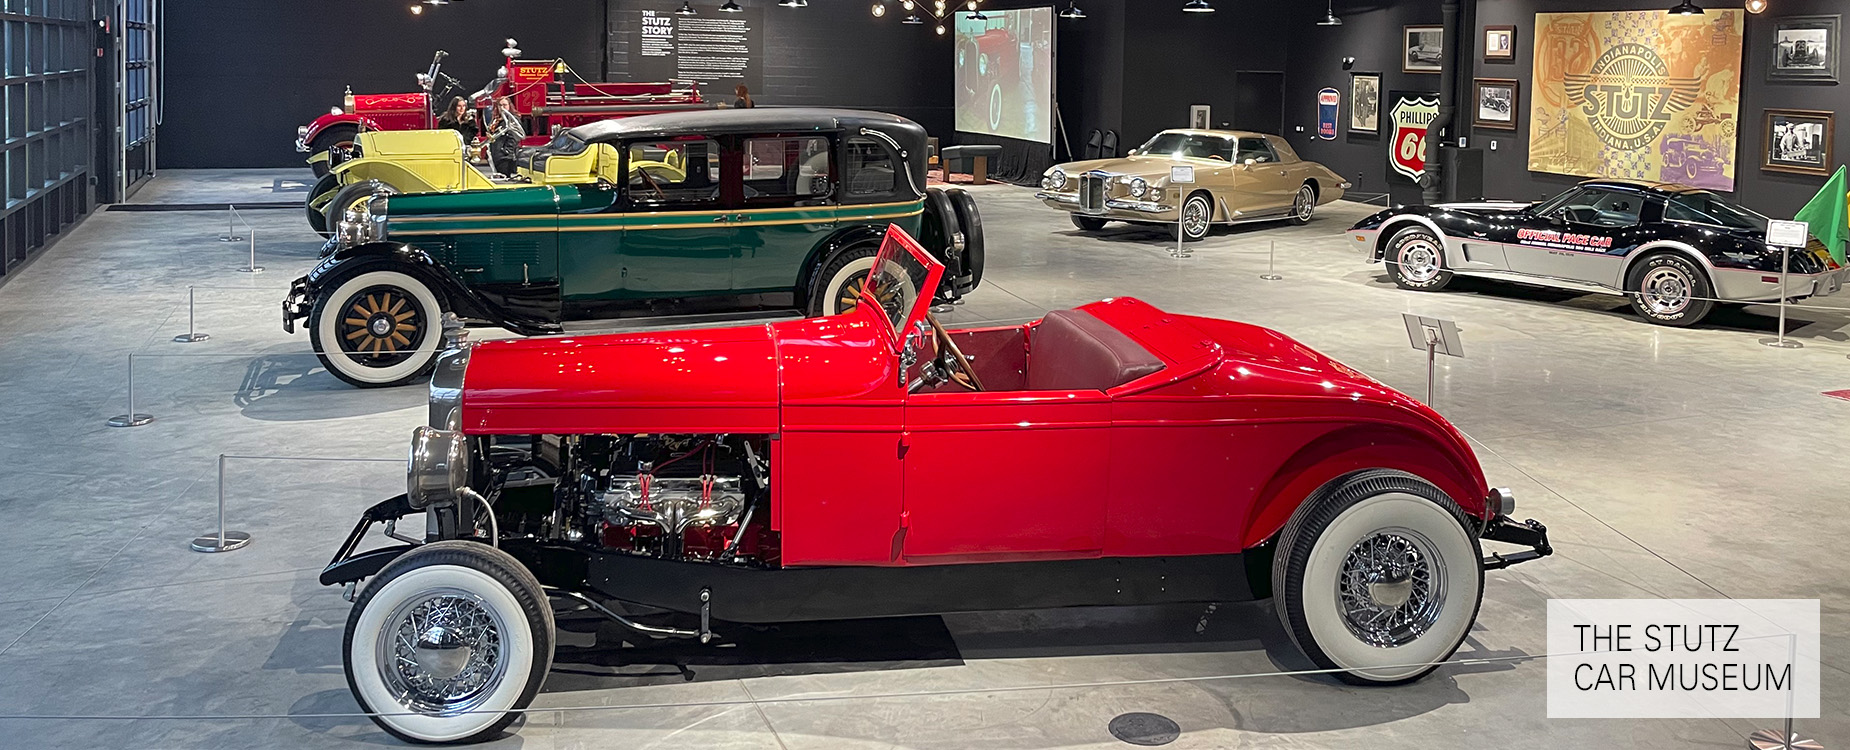 The Stutz Car Museum